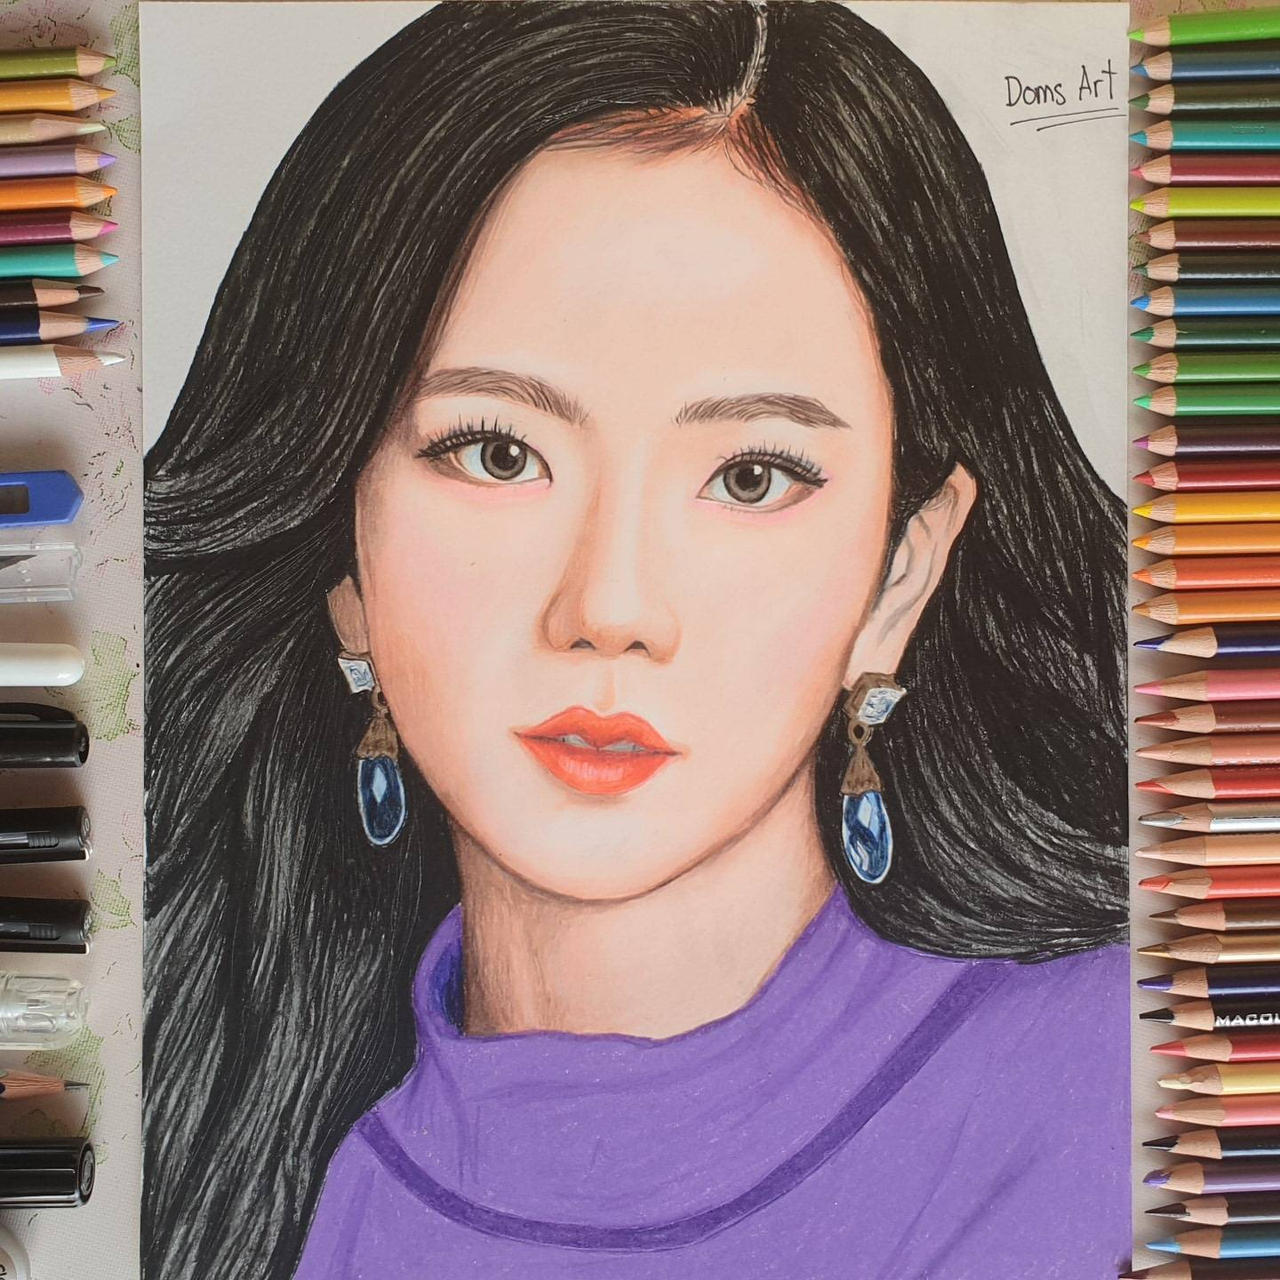 Blackpink Jisoo colored pencil drawing by domsart09 on DeviantArt